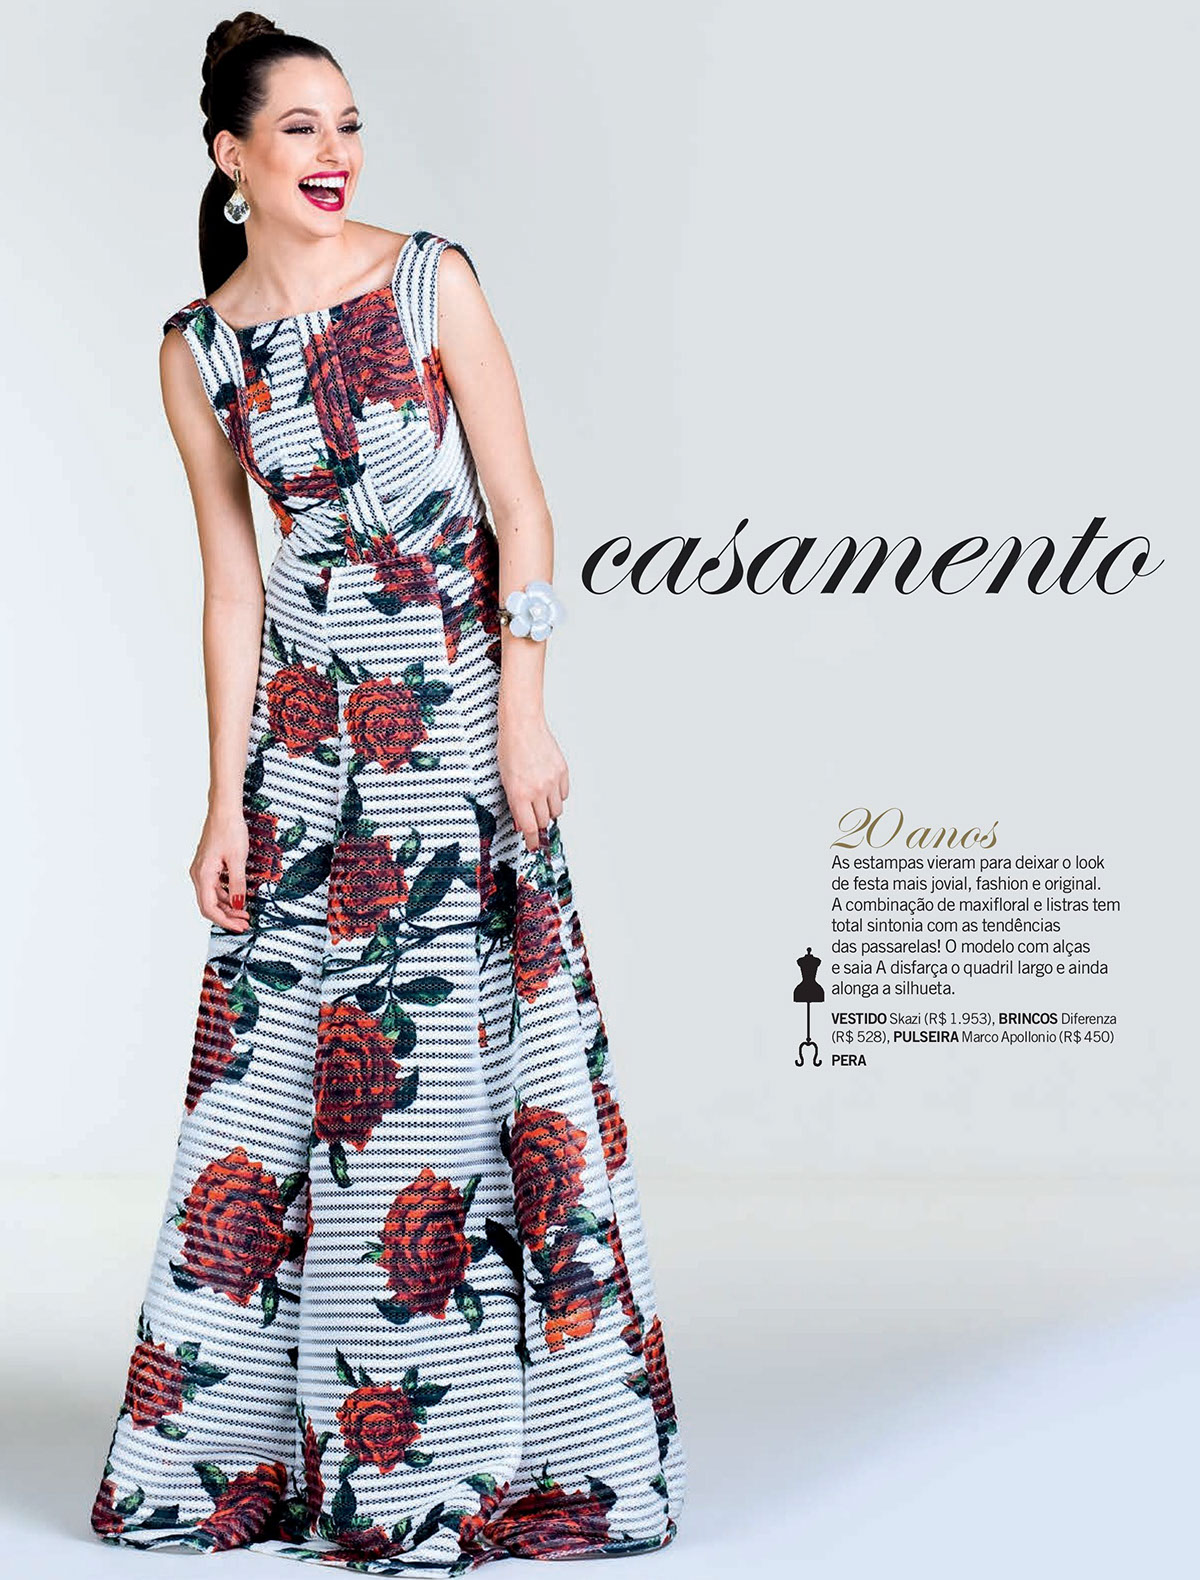 chic womenswear fashion magazine Brazil party dress Fashion  couture handsewn all ages girls women